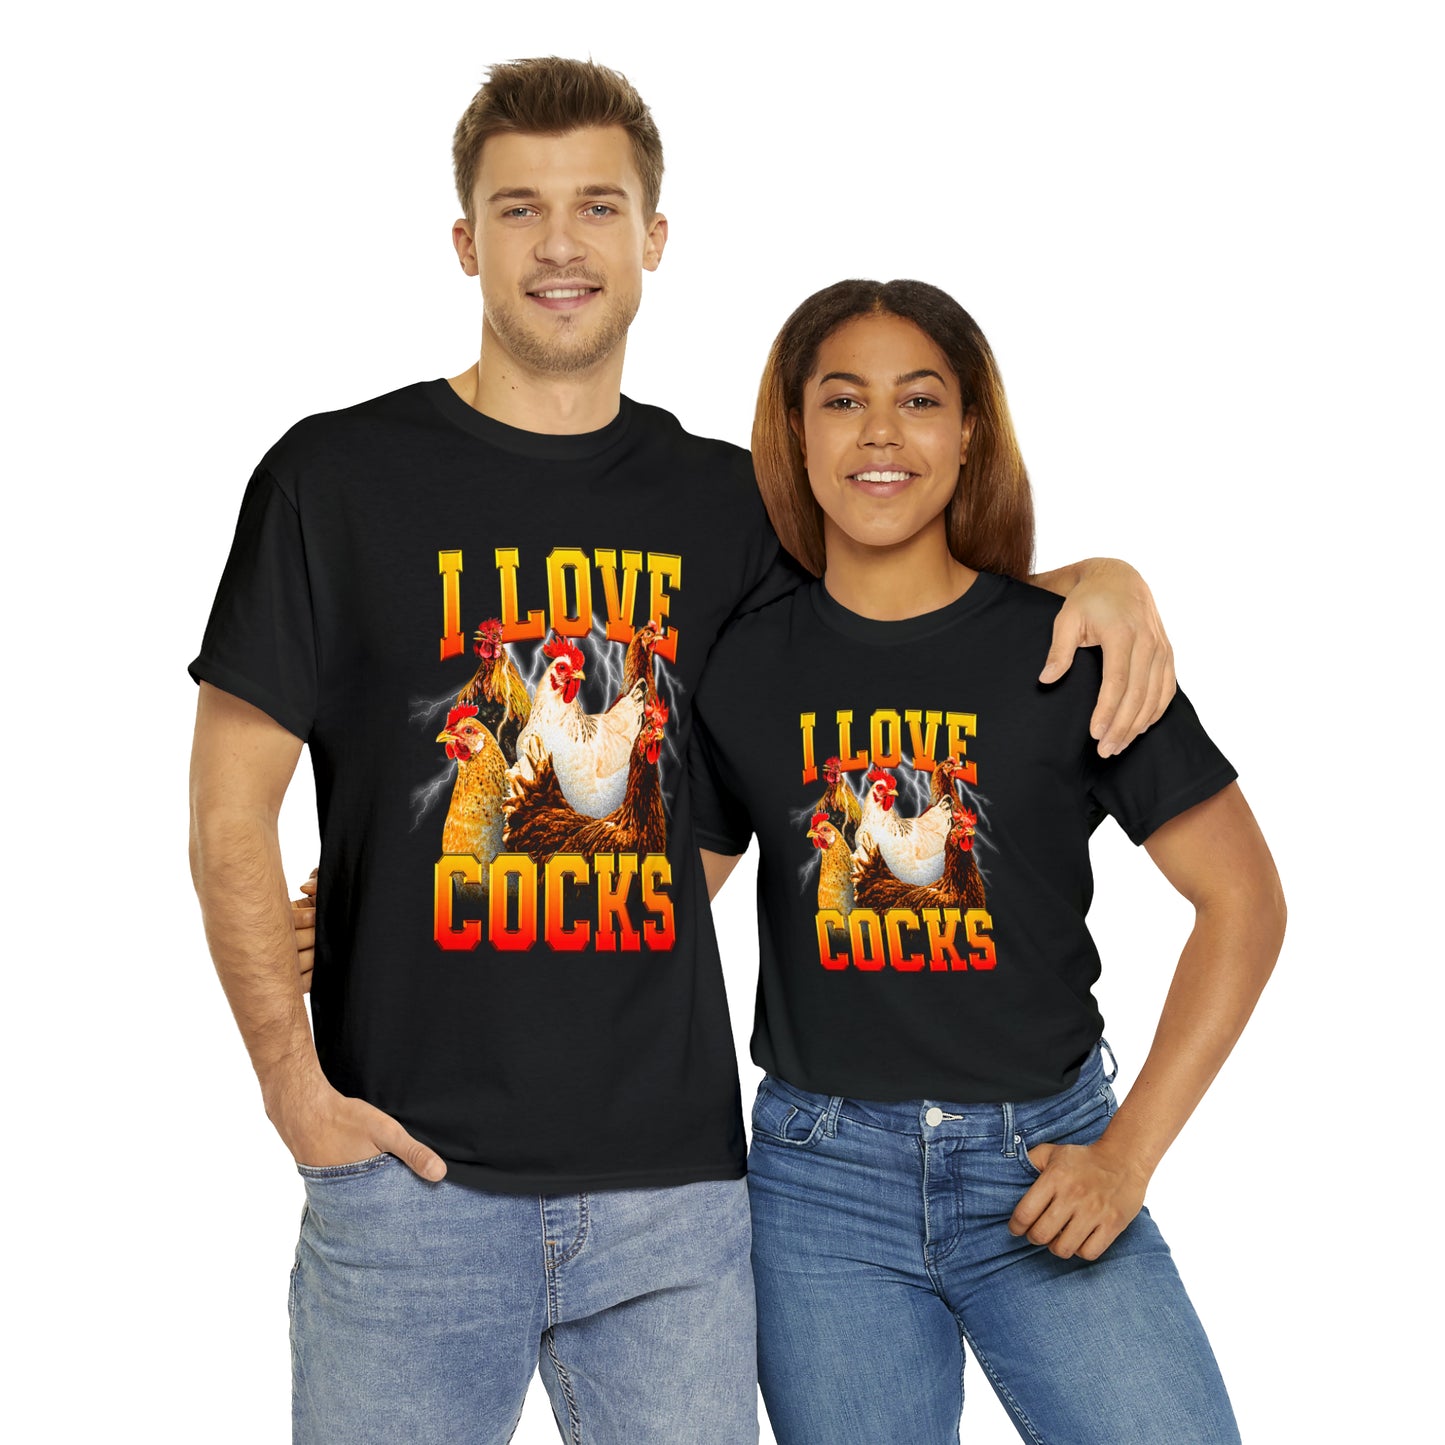 I Love Cocks!